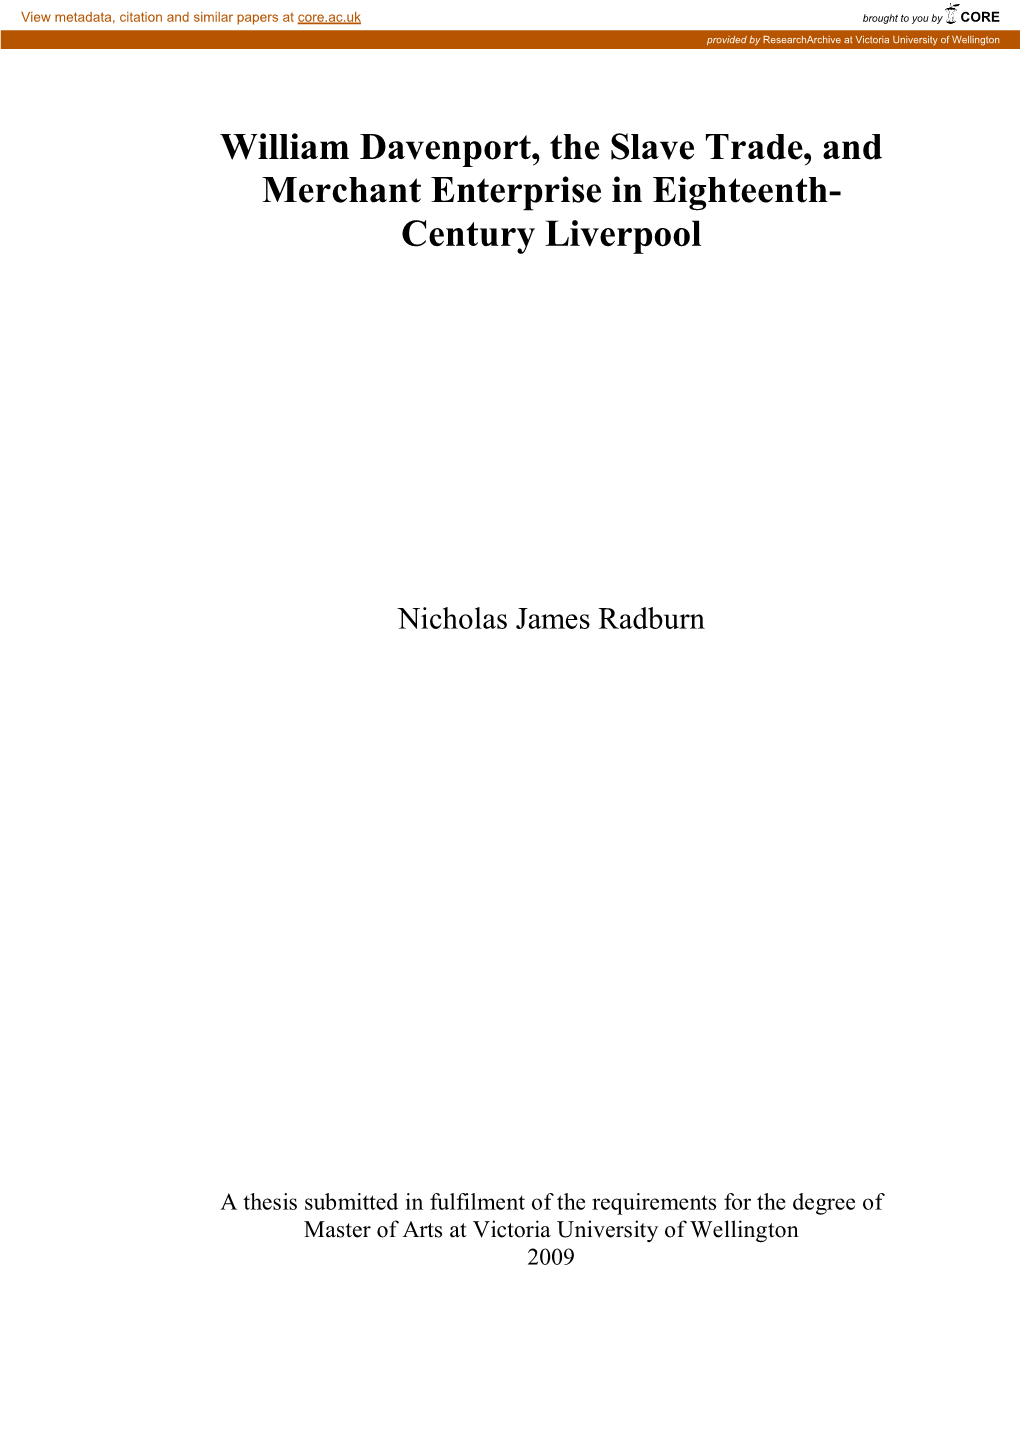 William Davenport, the Slave Trade, and Merchant Enterprise in Eighteenth- Century Liverpool